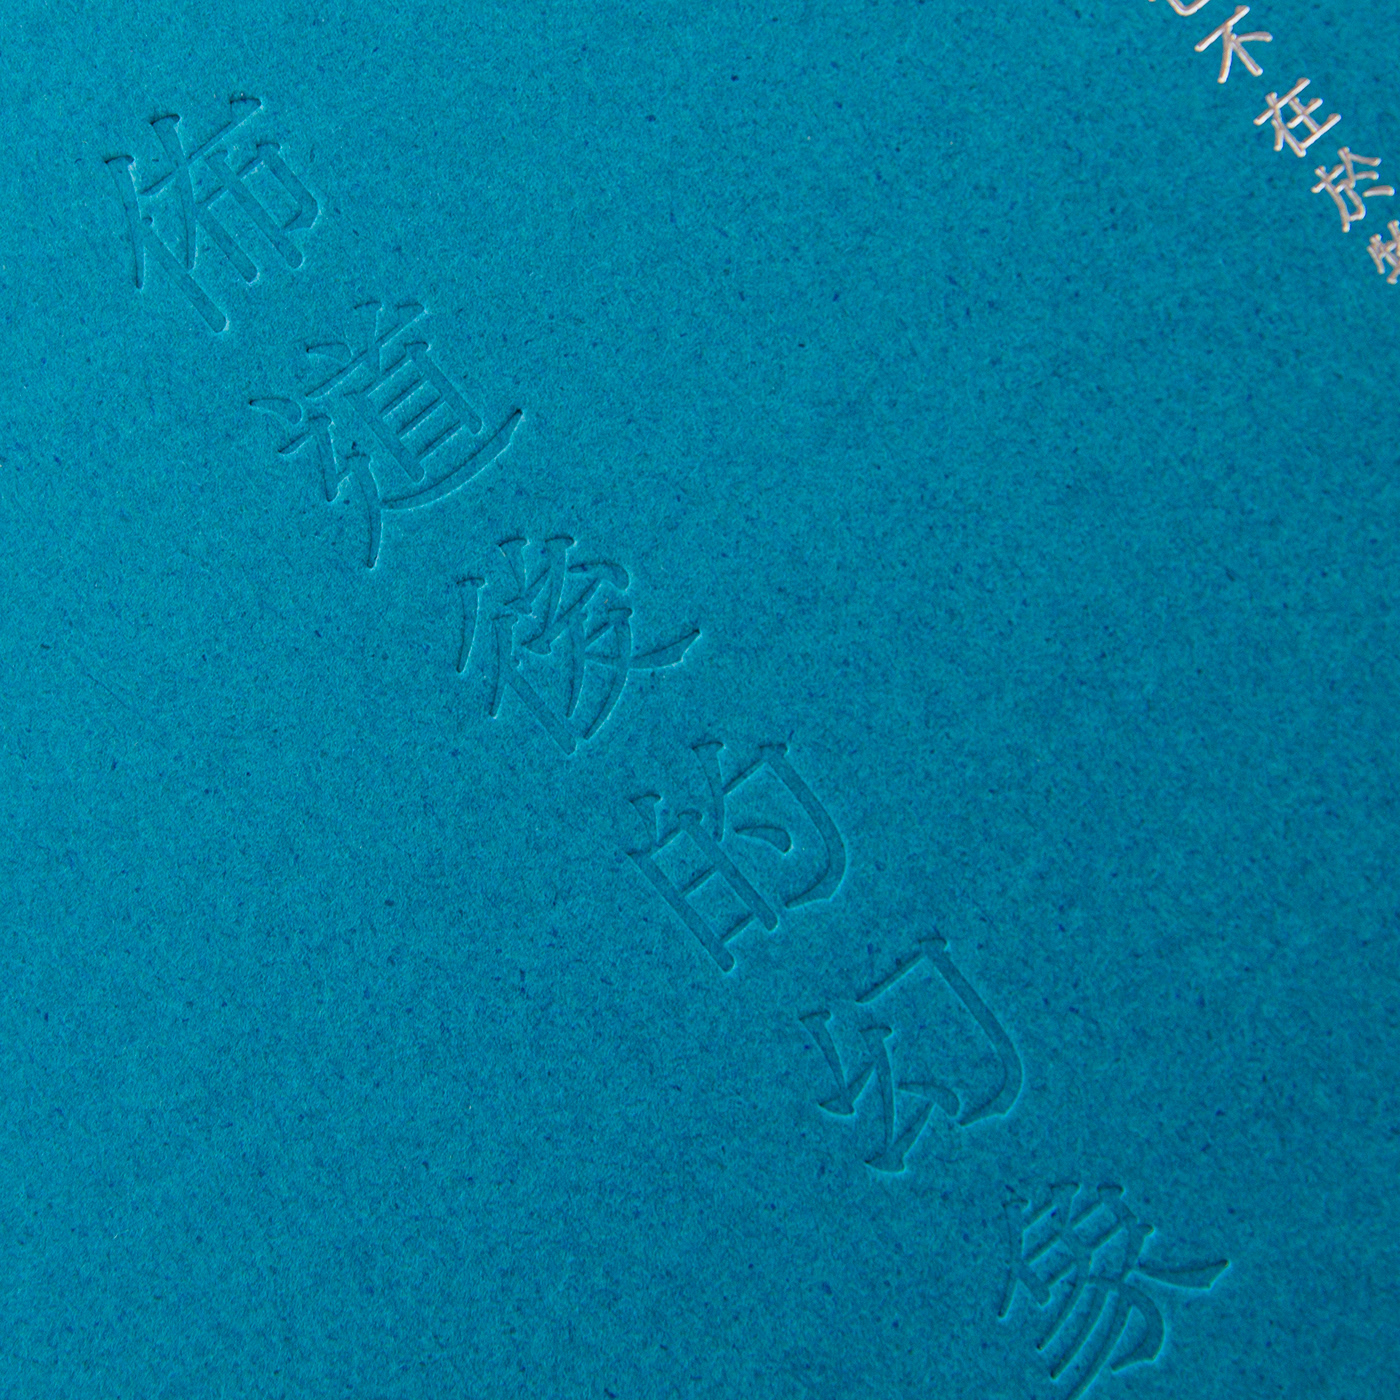 Bookdesign bookdesigner bunkobon editorial design  graphicdesign japan Packaging publicationdesign story typography  